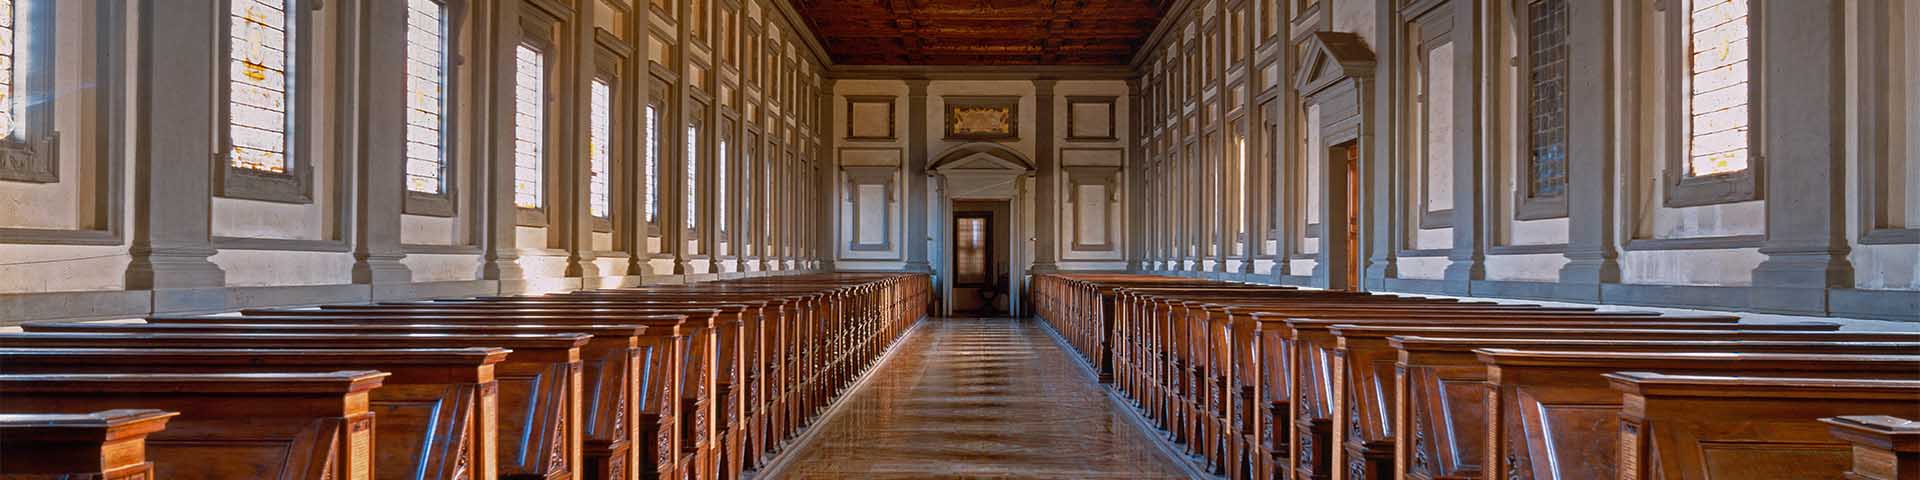 Biblioteca Mediceo Laurenziana